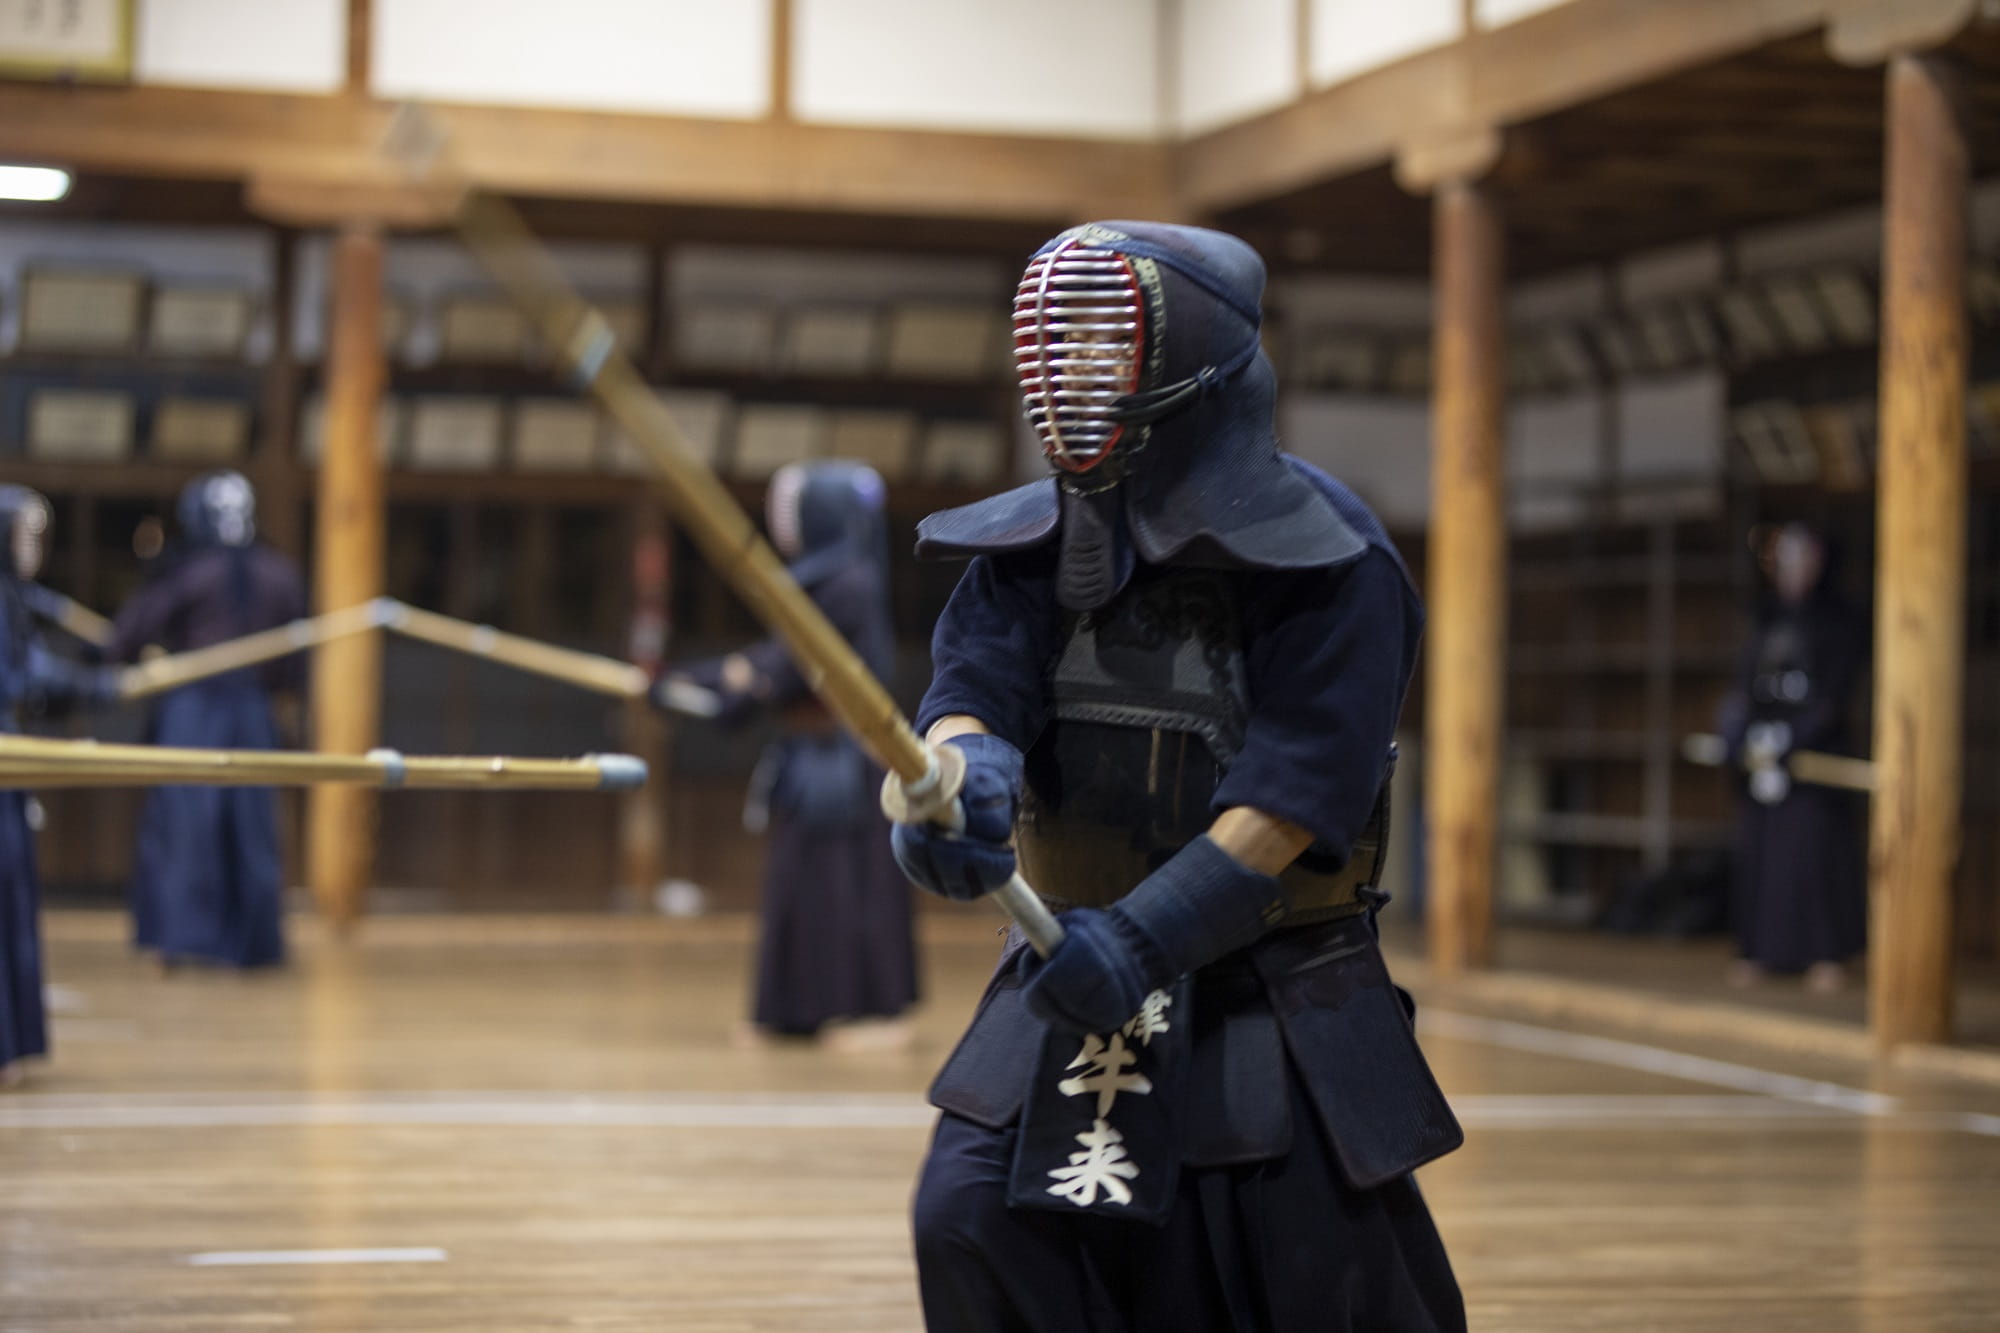 Study samurai swordplay in the castle town of Aizuwakamatsu, where traditional values never grew old.